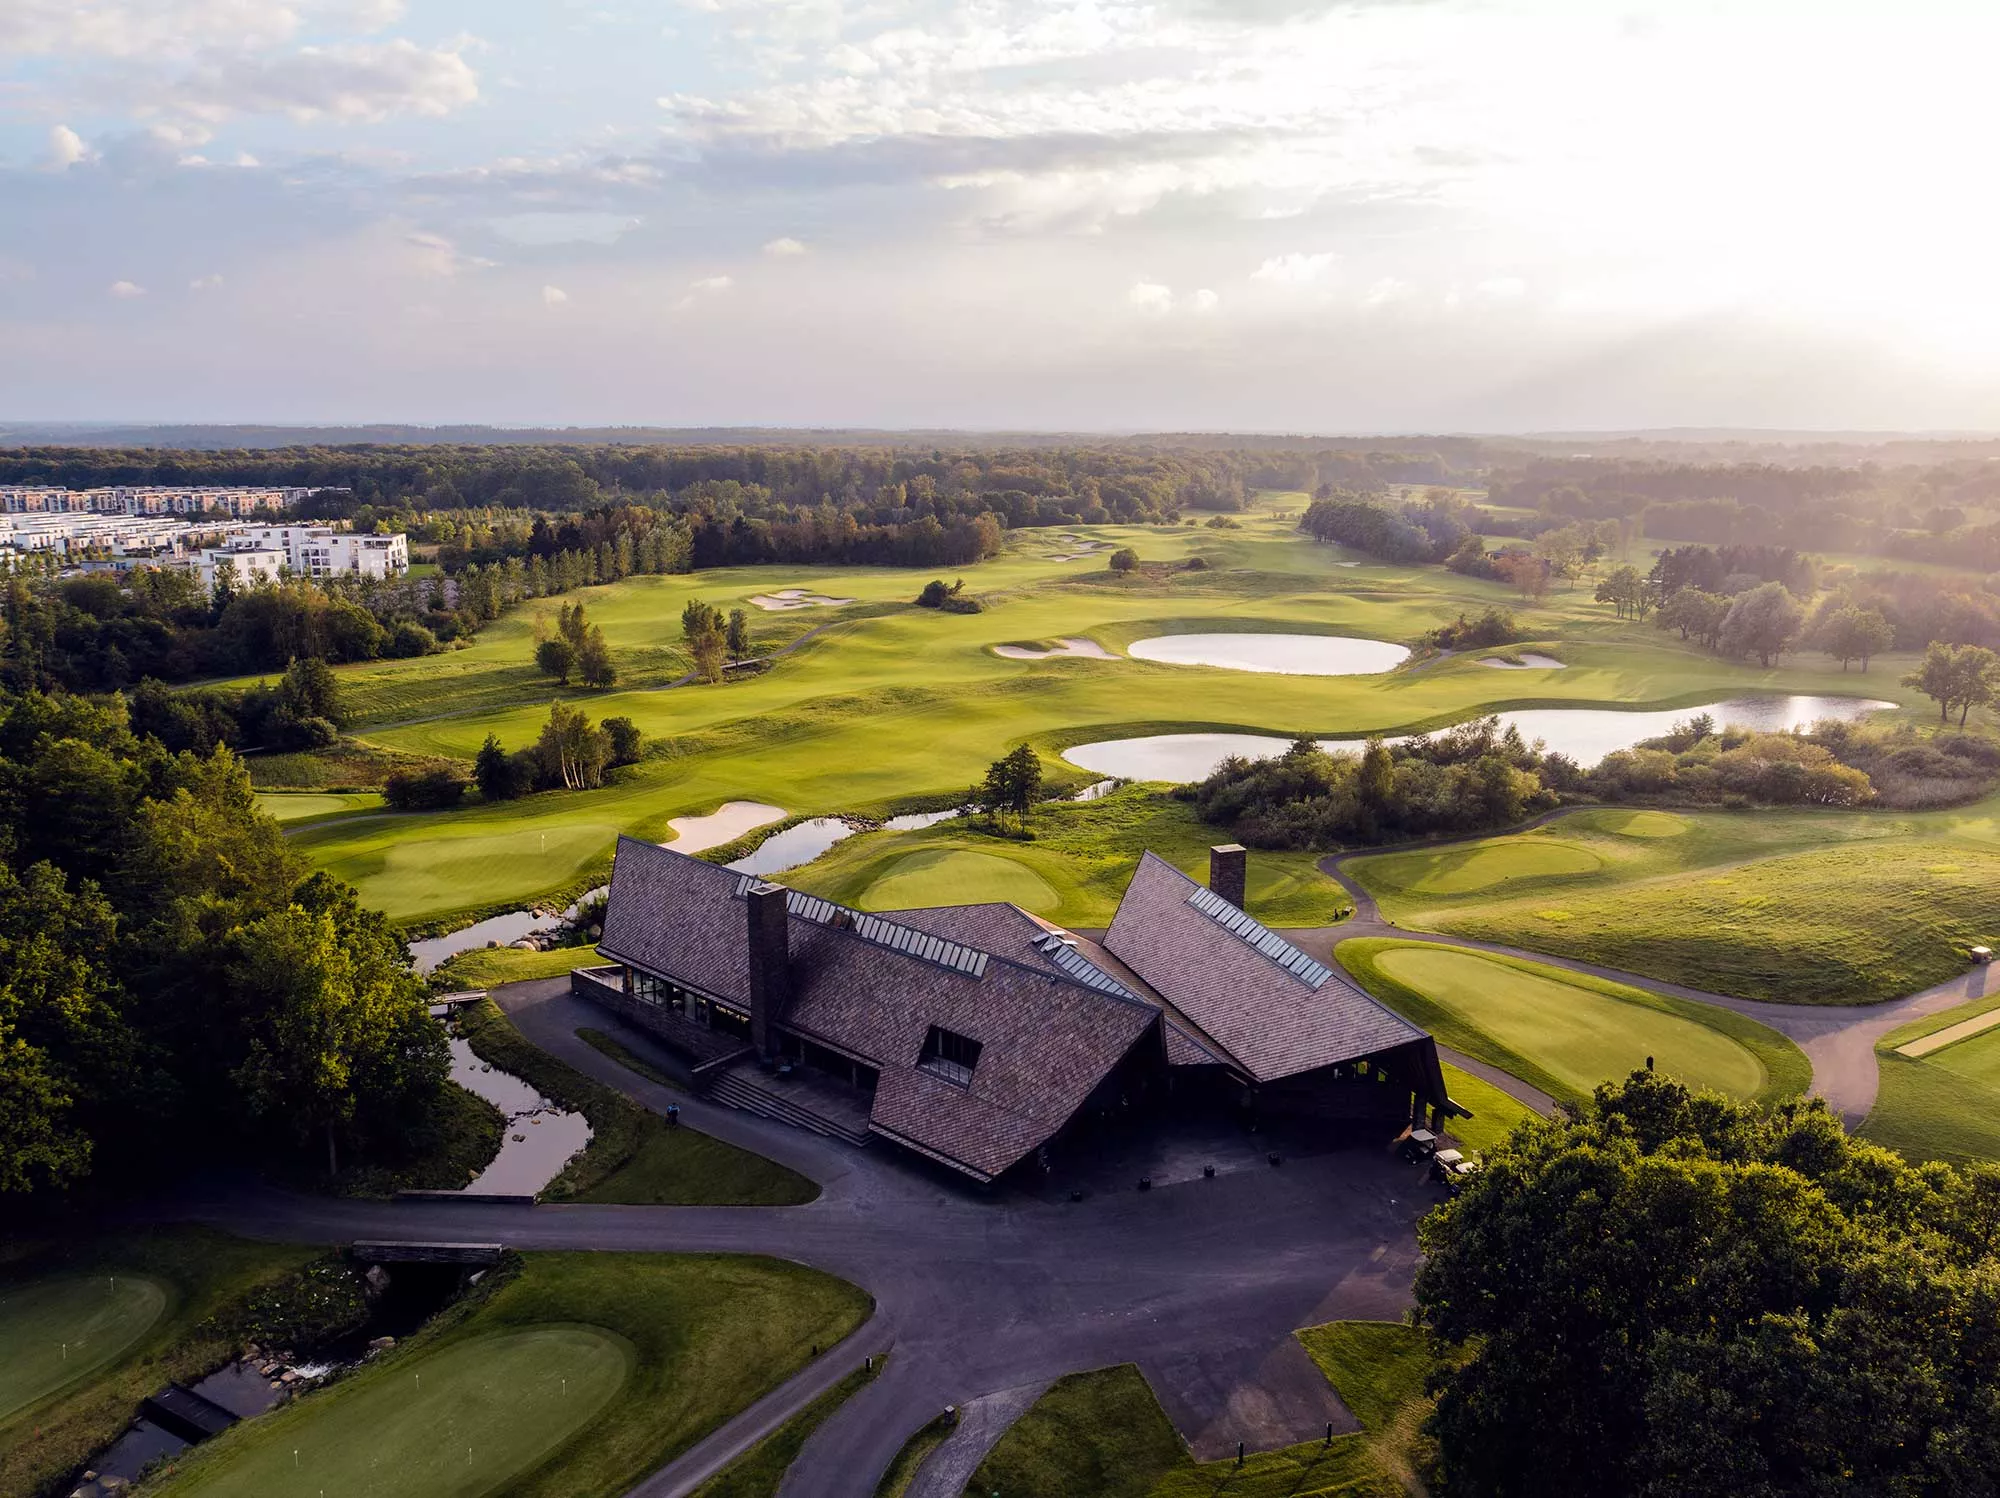 The Scandinavian Golf Club in Denmark, Europe | Golf - Rated 3.8